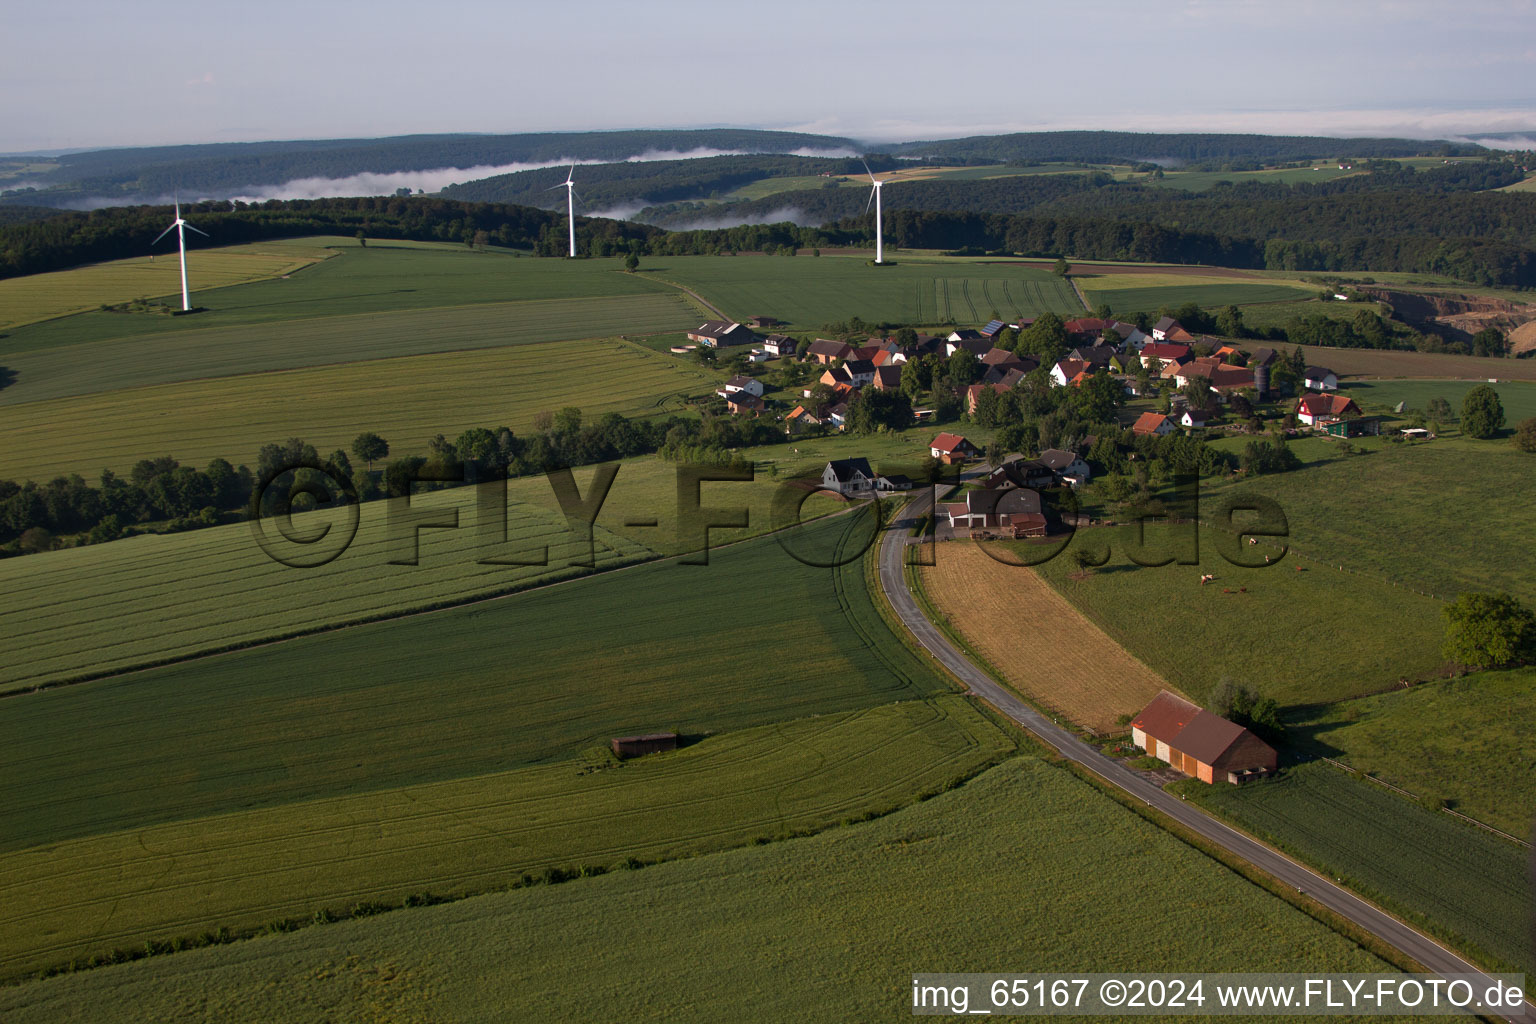 Wind turbine windmills on a field in the district Bremerberg in Marienmuenster in the state North Rhine-Westphalia